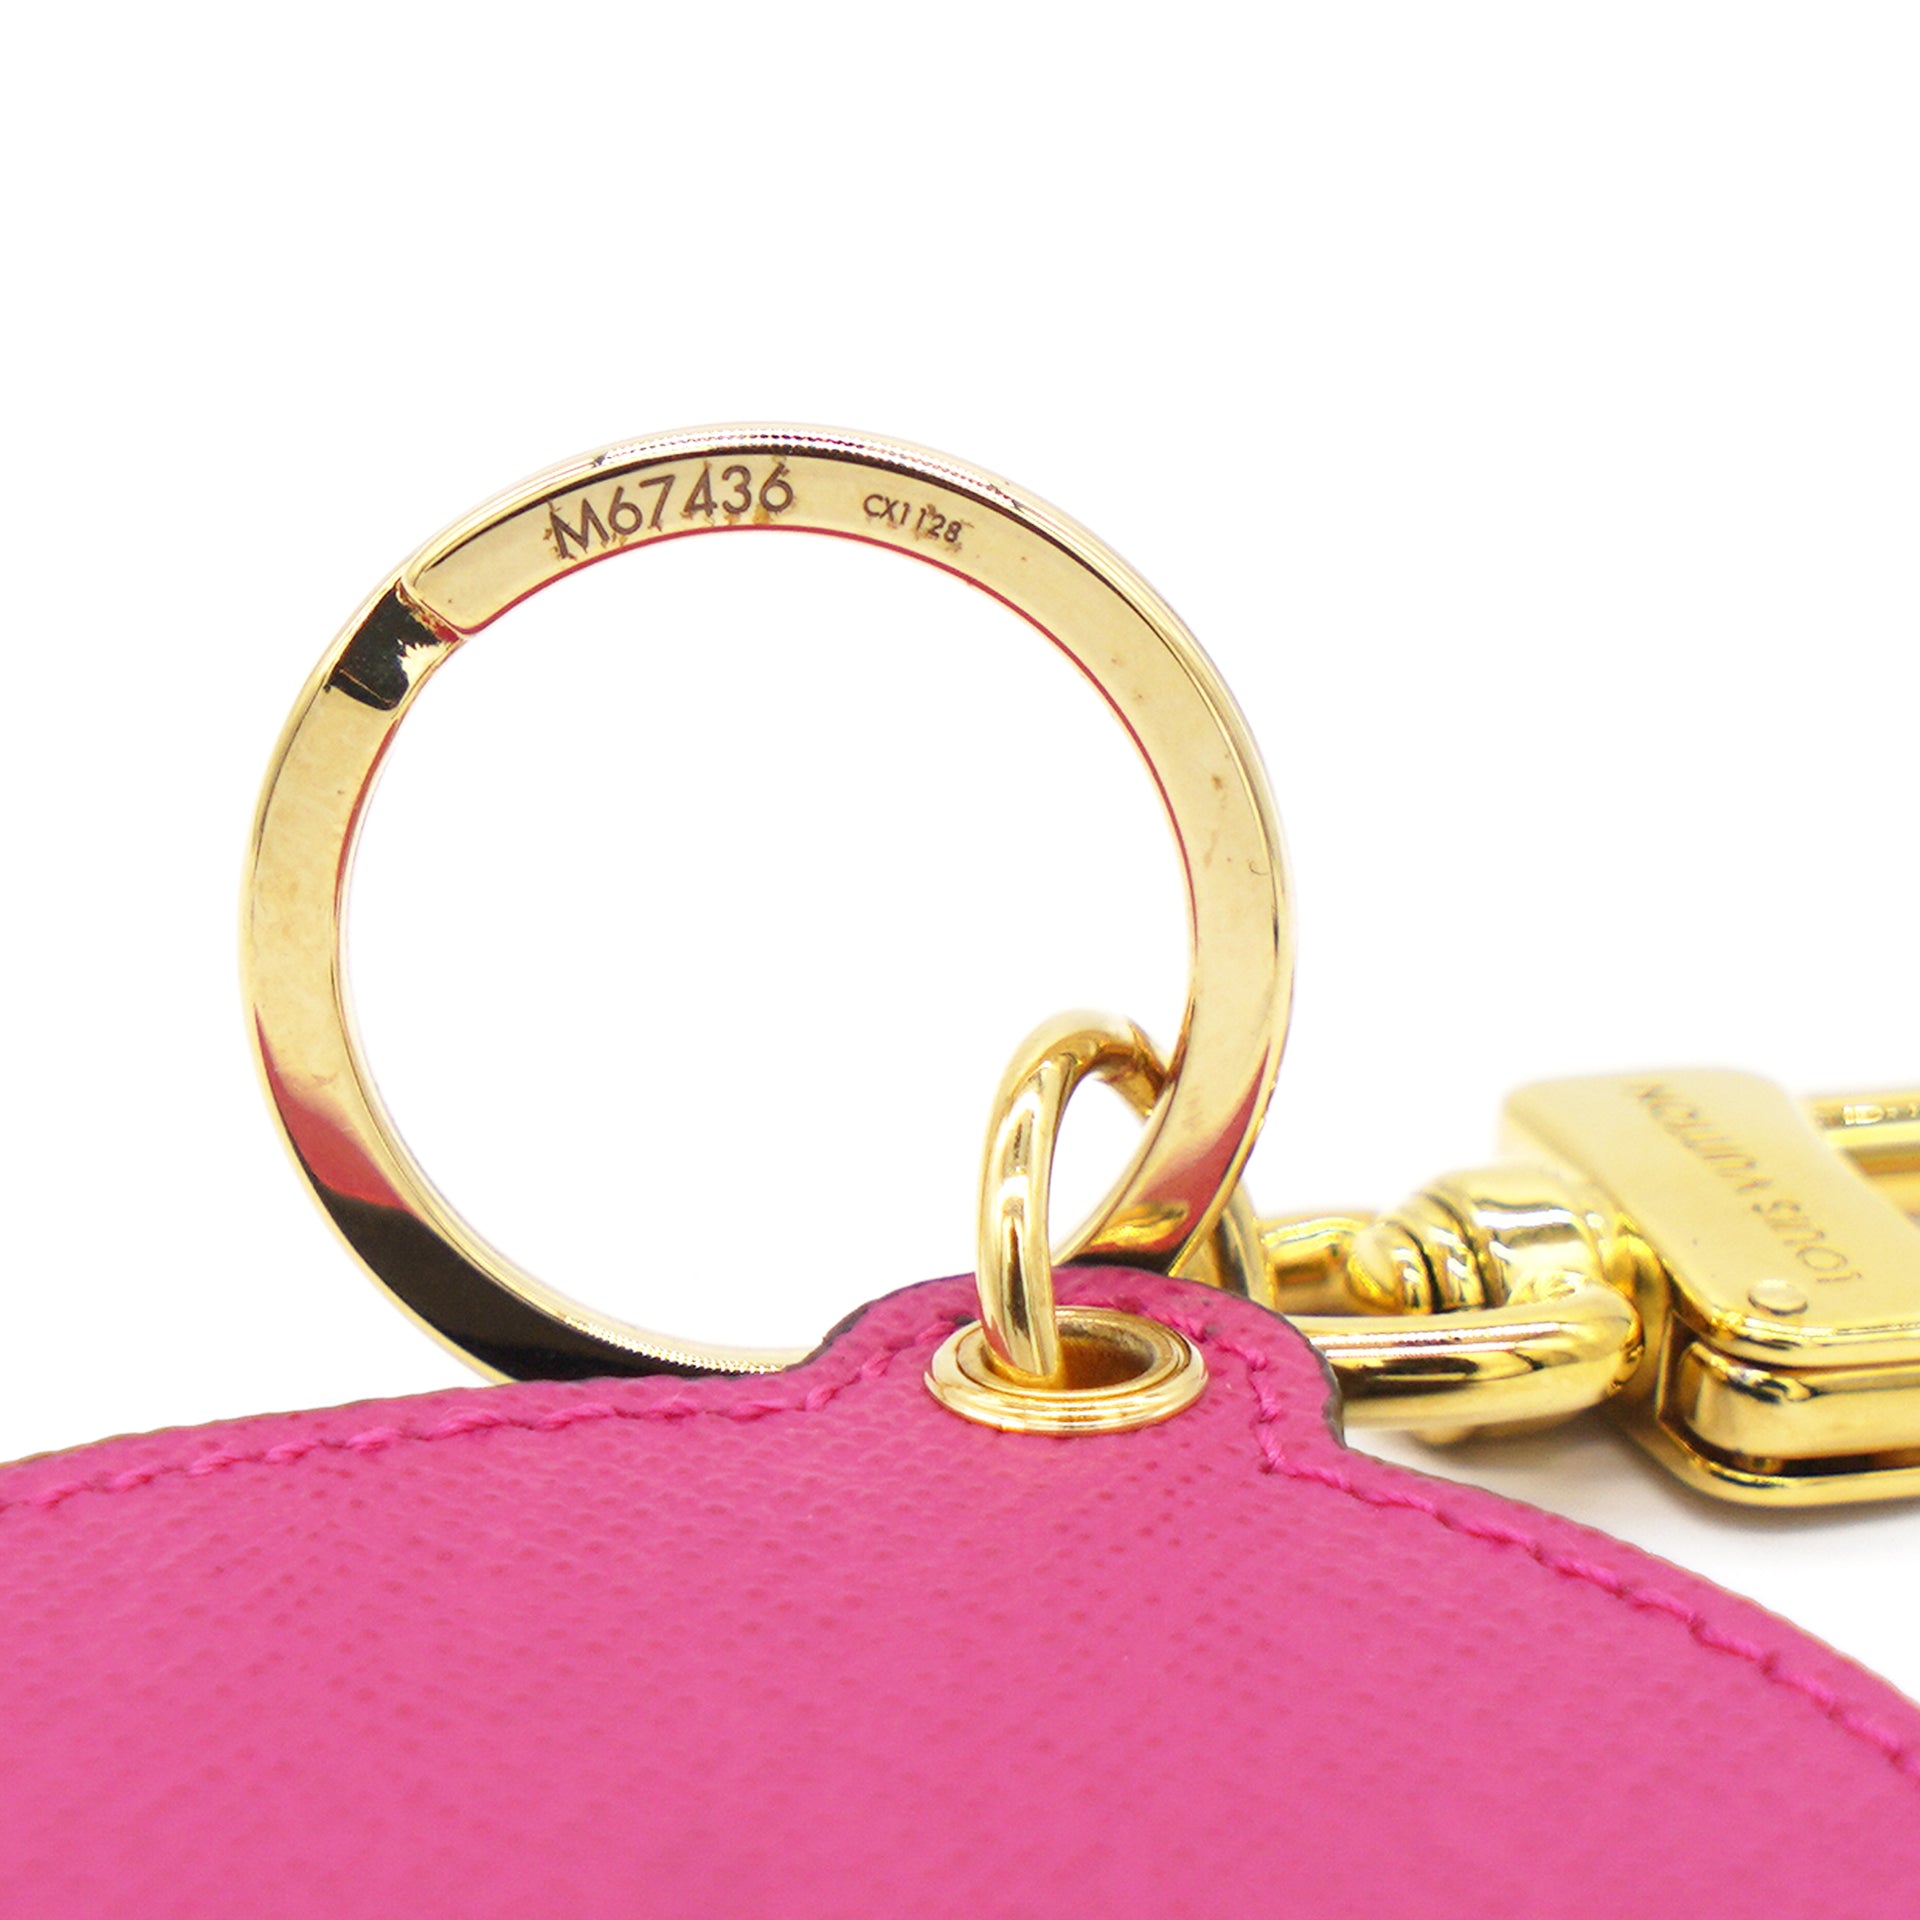 Louis Vuitton Animal Print Key Ring and Bag Charm